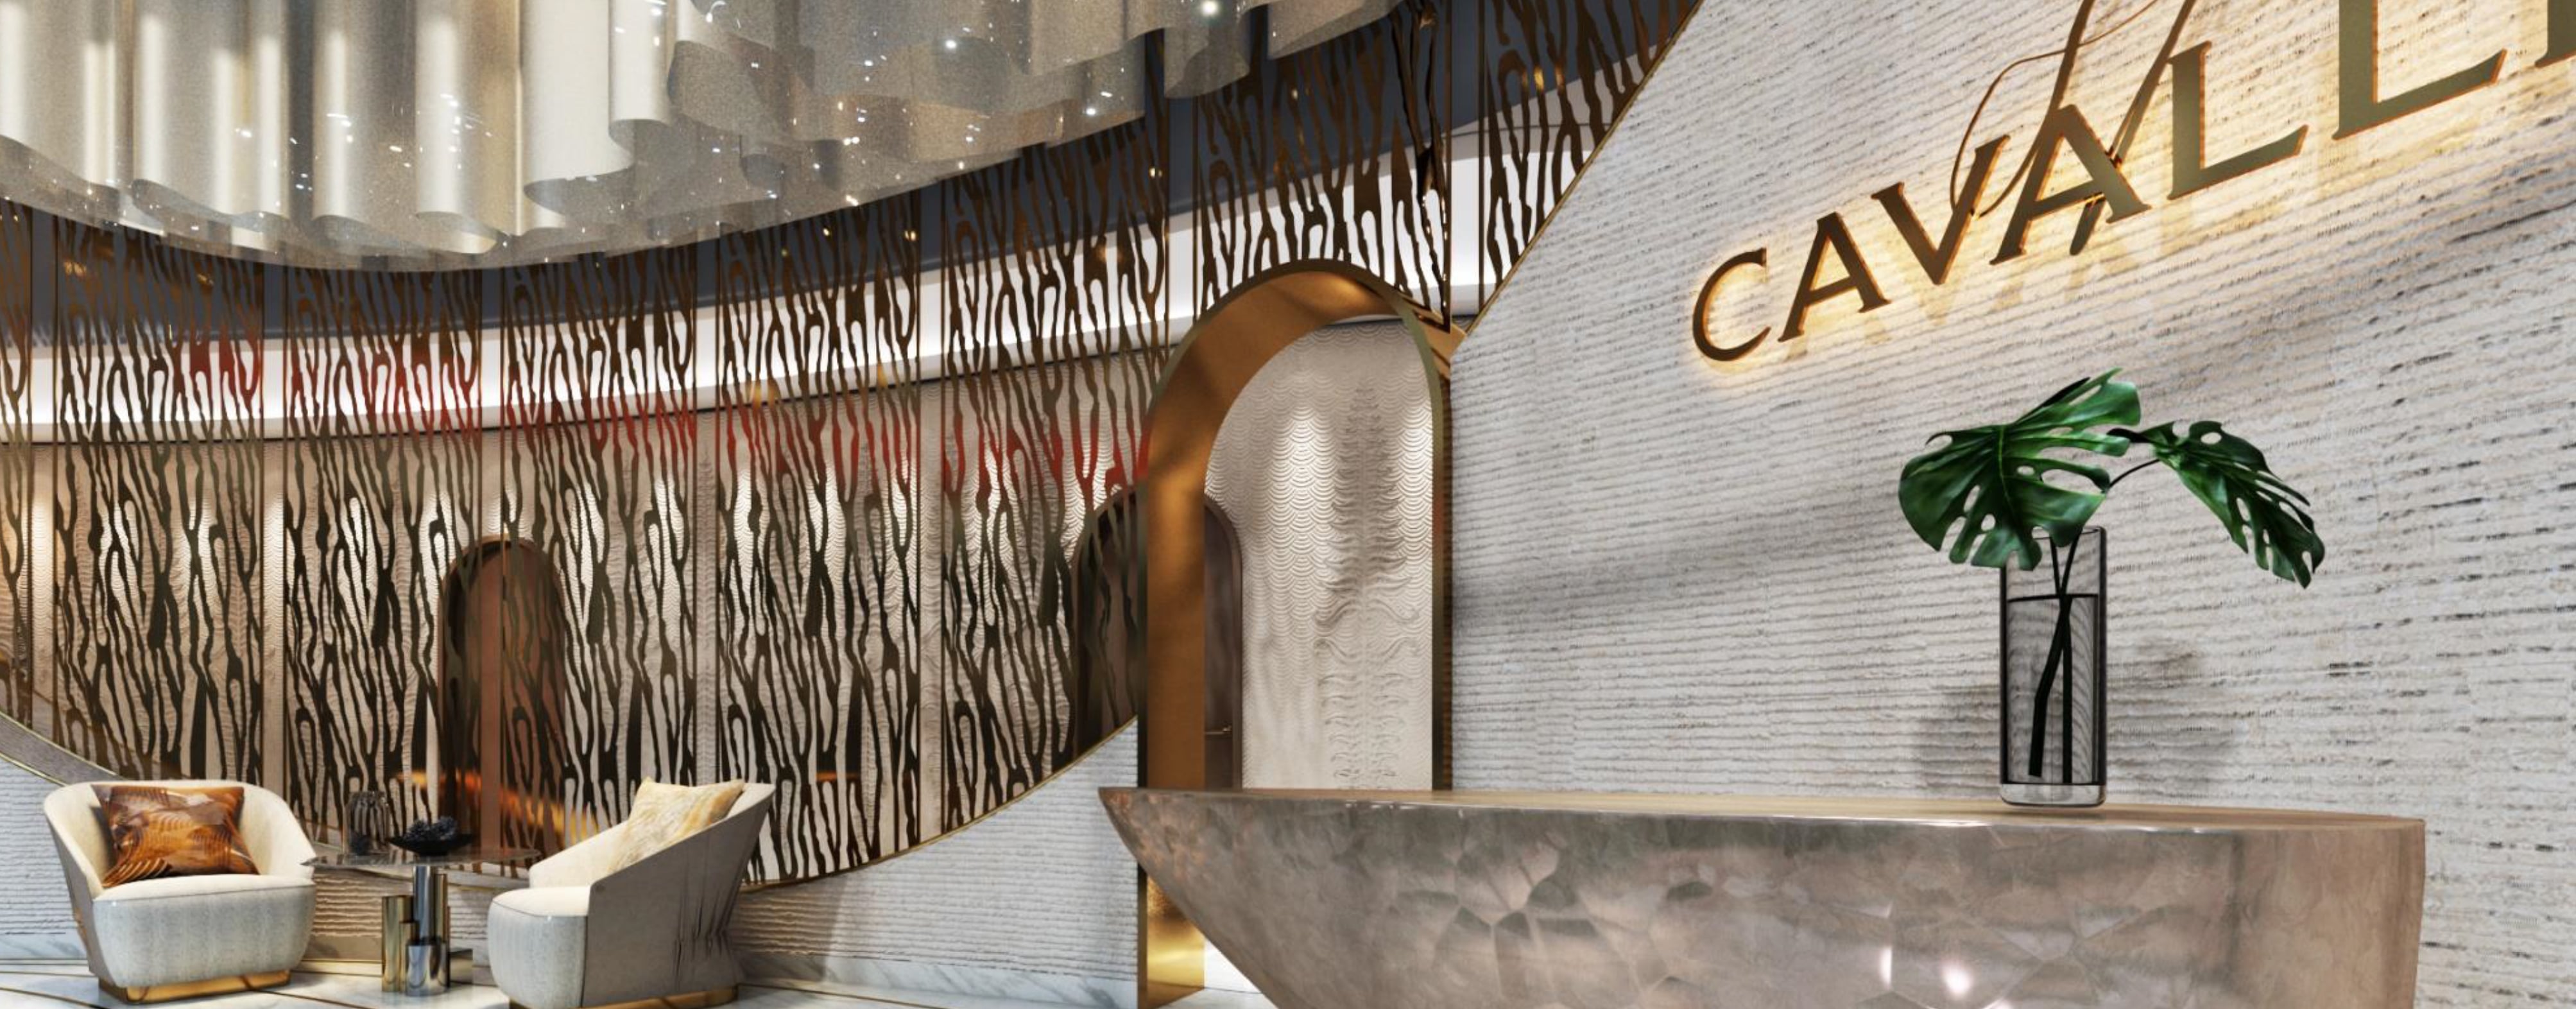 Cavalli Couture at Dubai in Dubai Water Canal by Damac properties